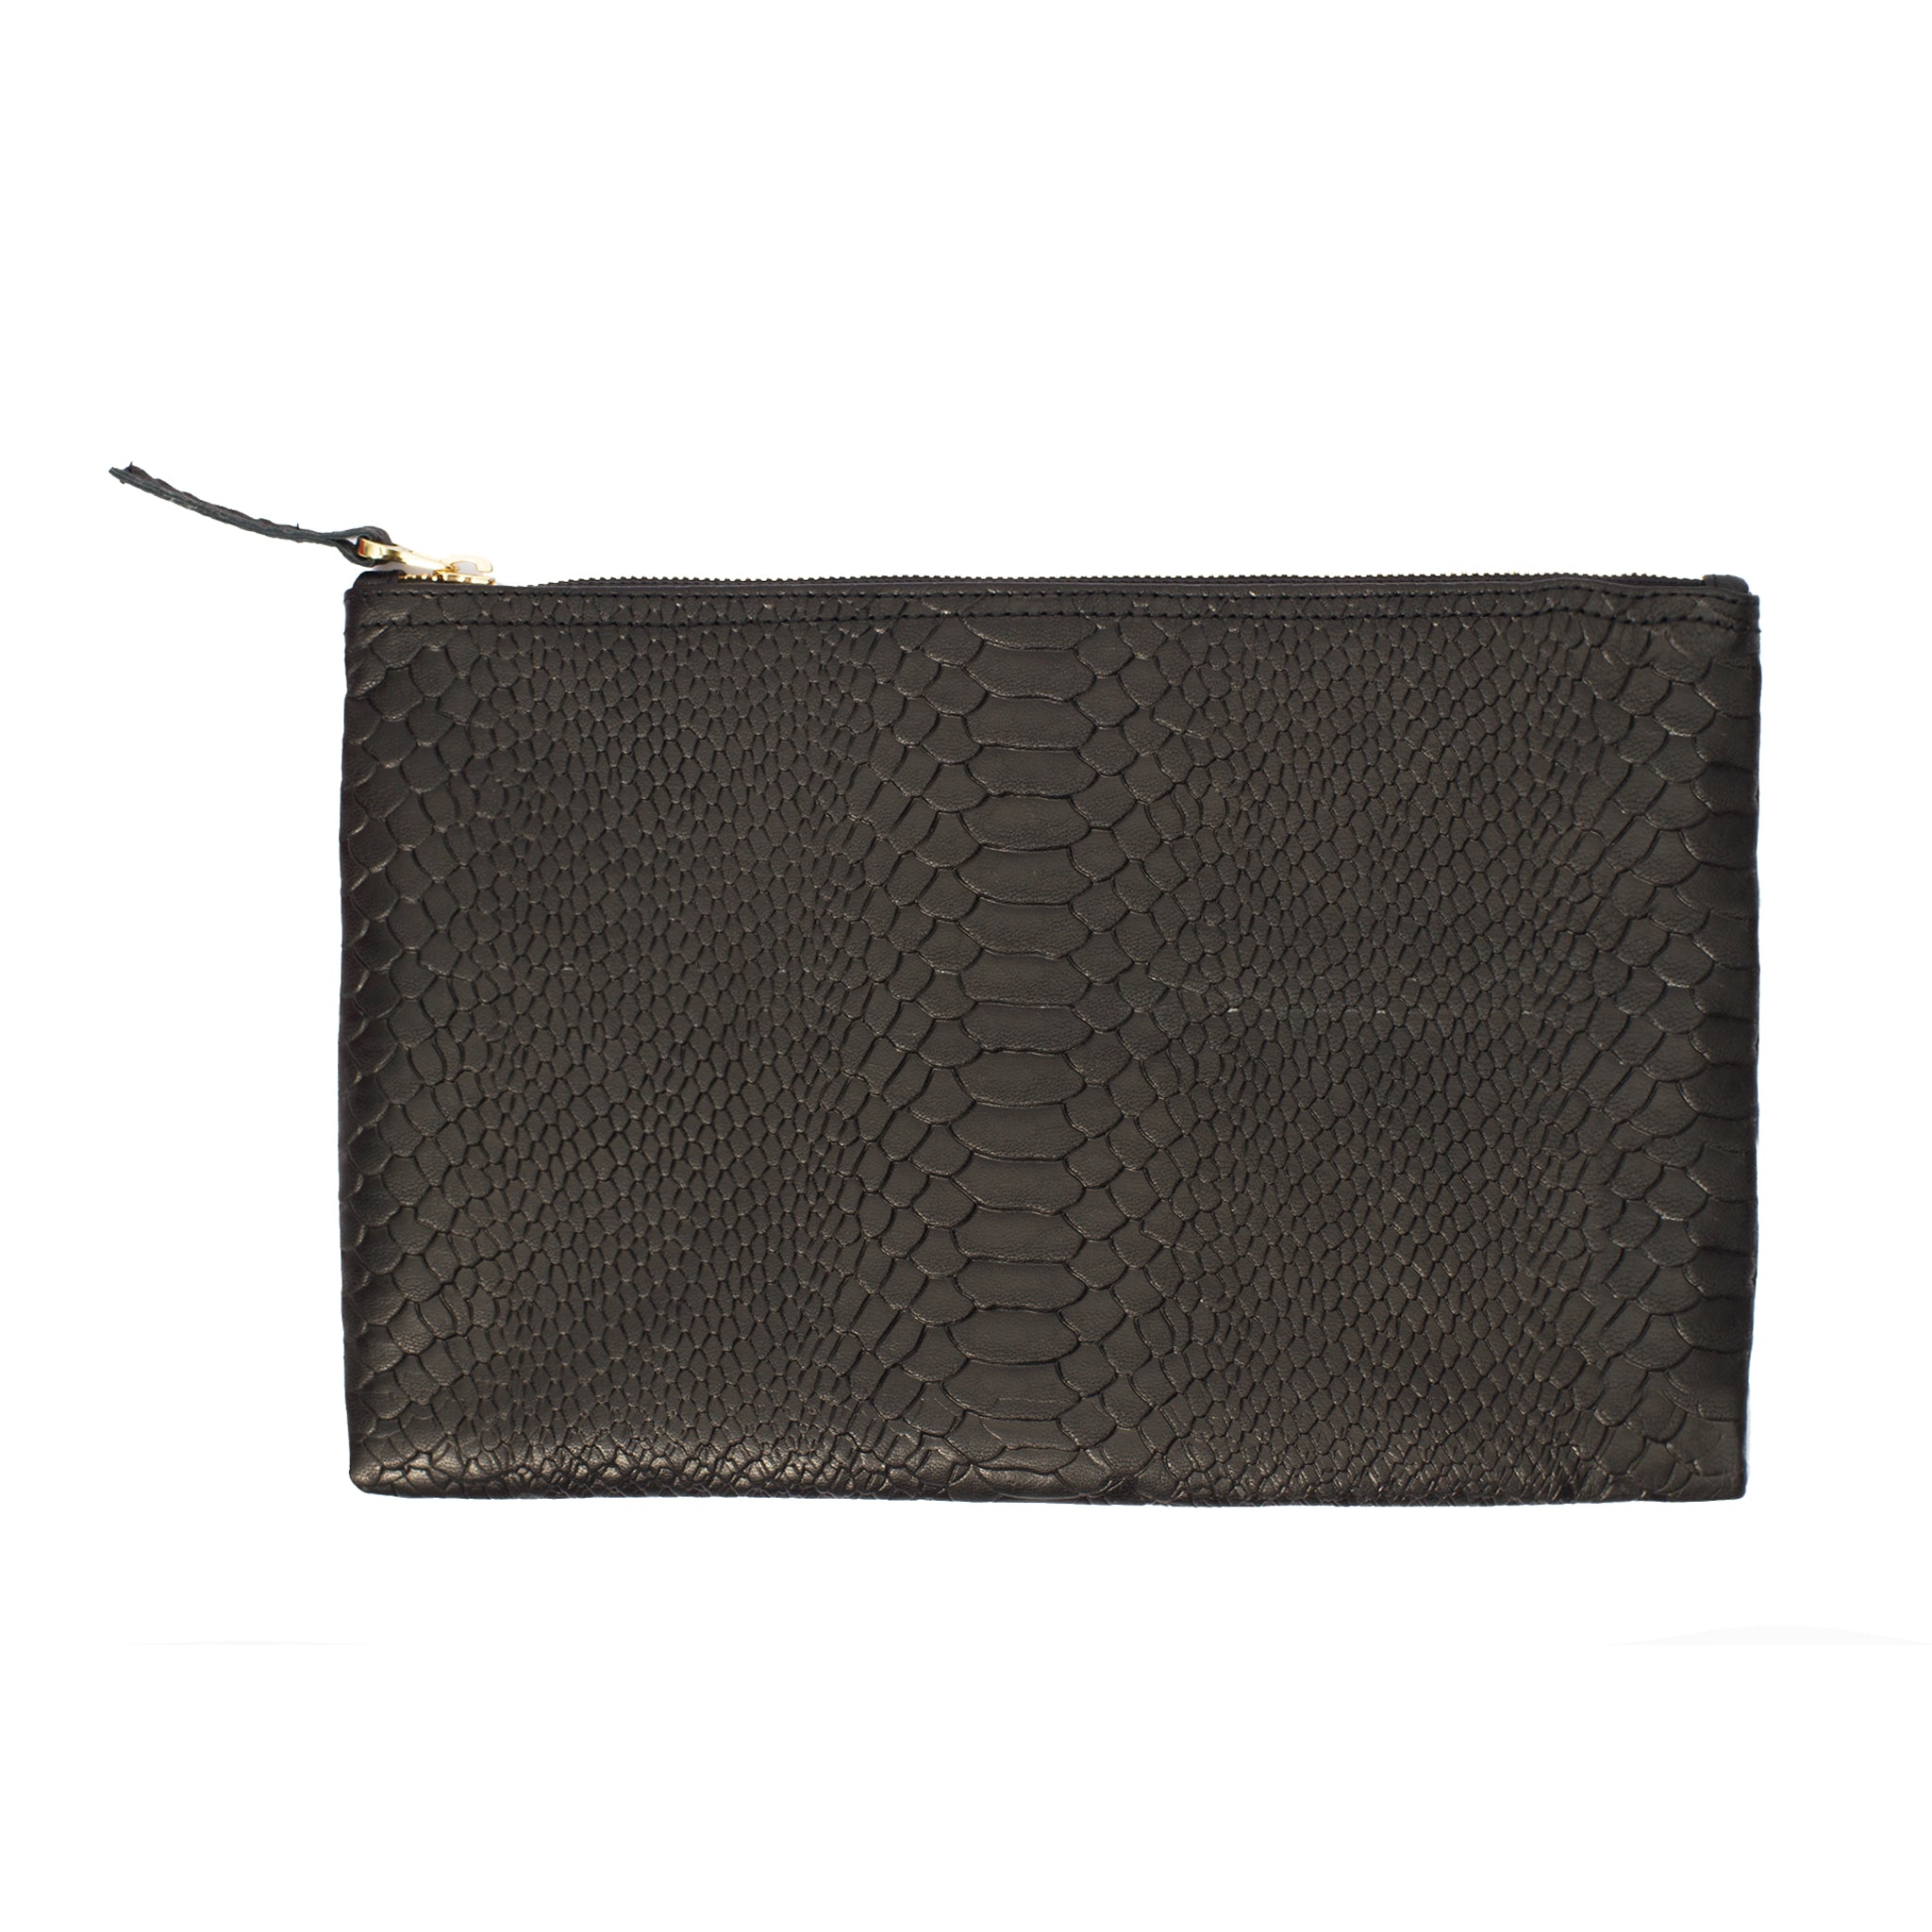 Black Flat Wallet Clutch Genuine Python Embossed Leather 